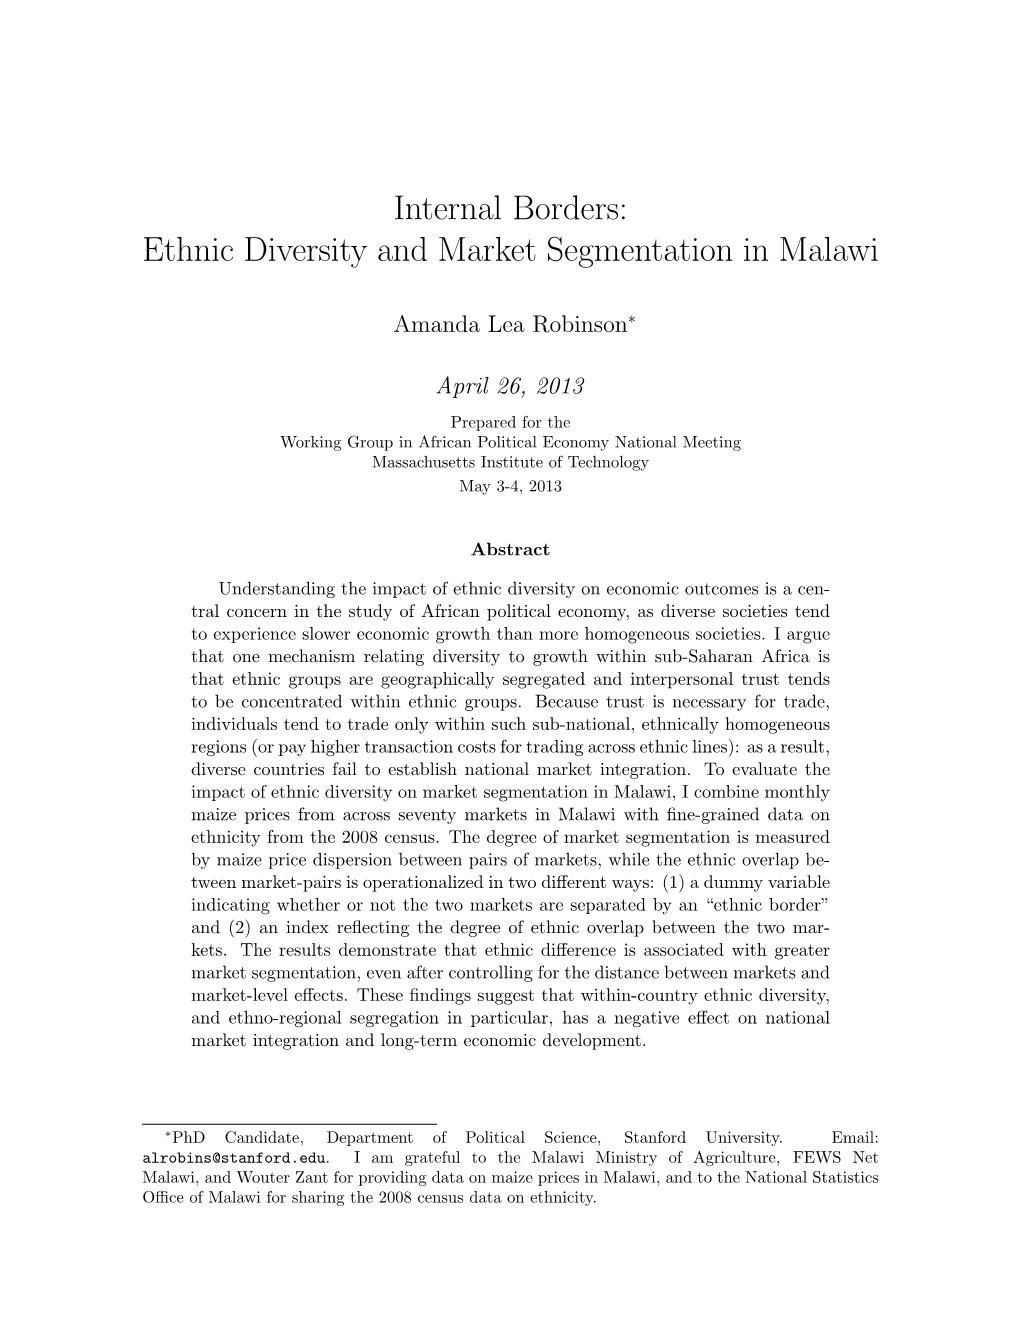 Internal Borders: Ethnic Diversity and Market Segmentation in Malawi